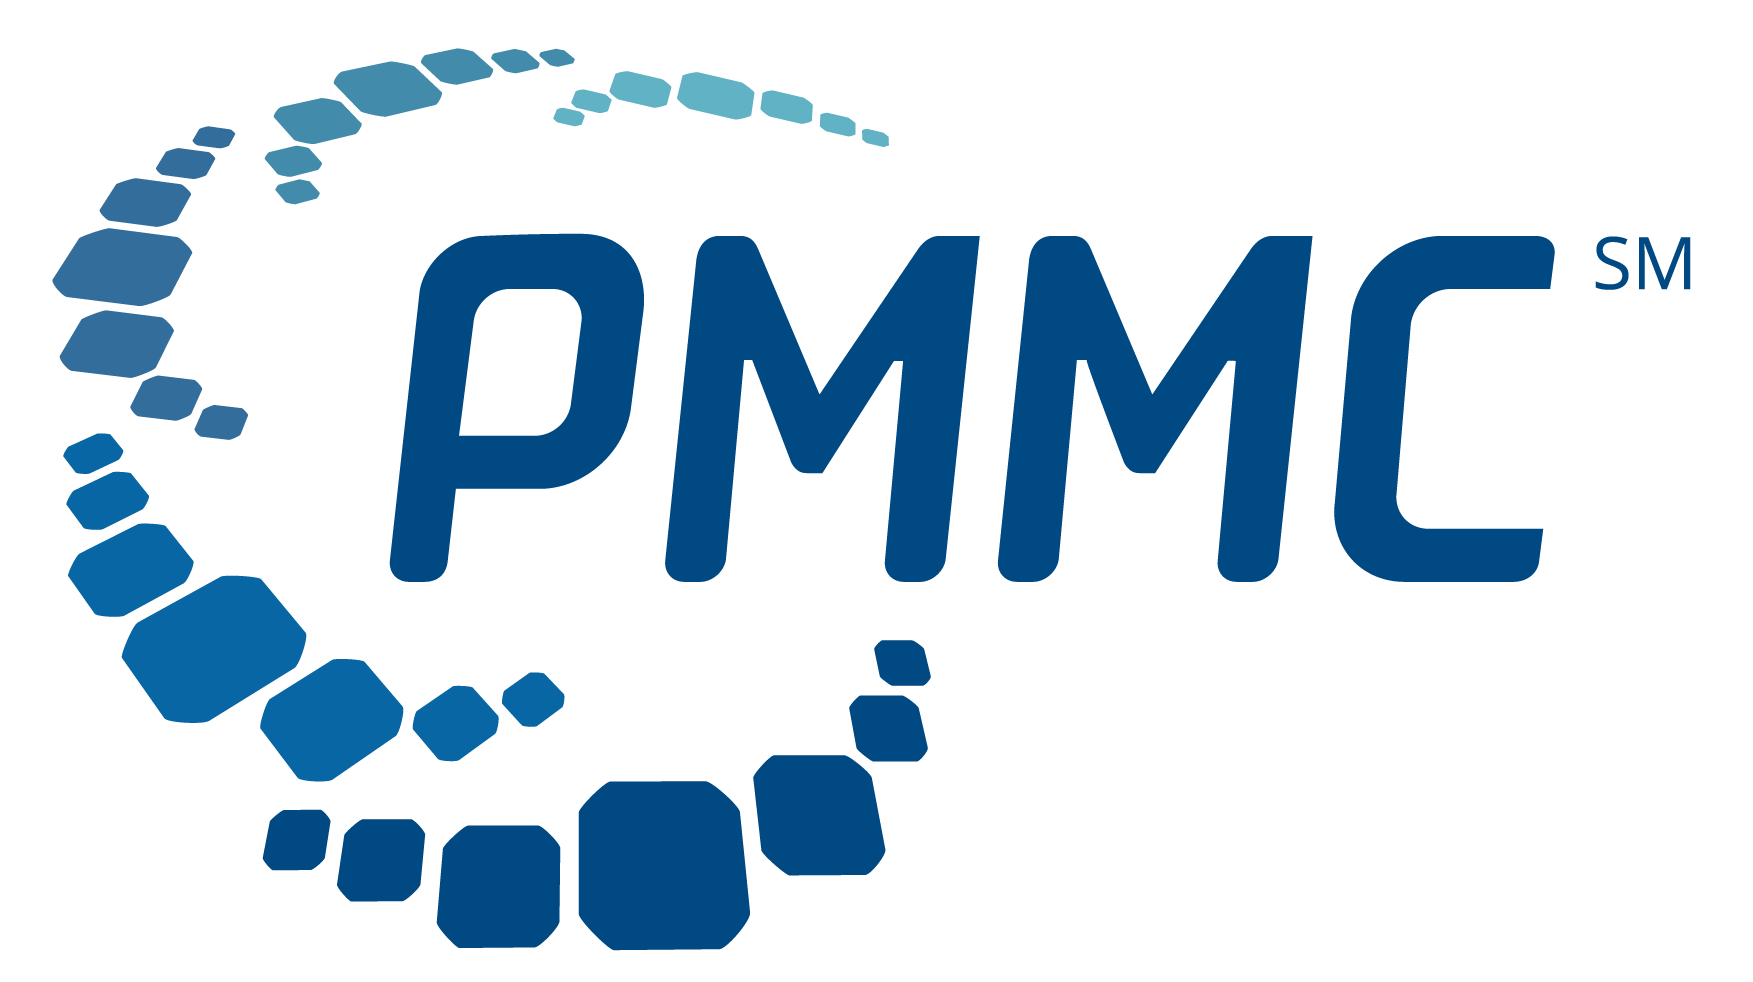 PMMC regains application knowledge and accelerates modernization for cloud